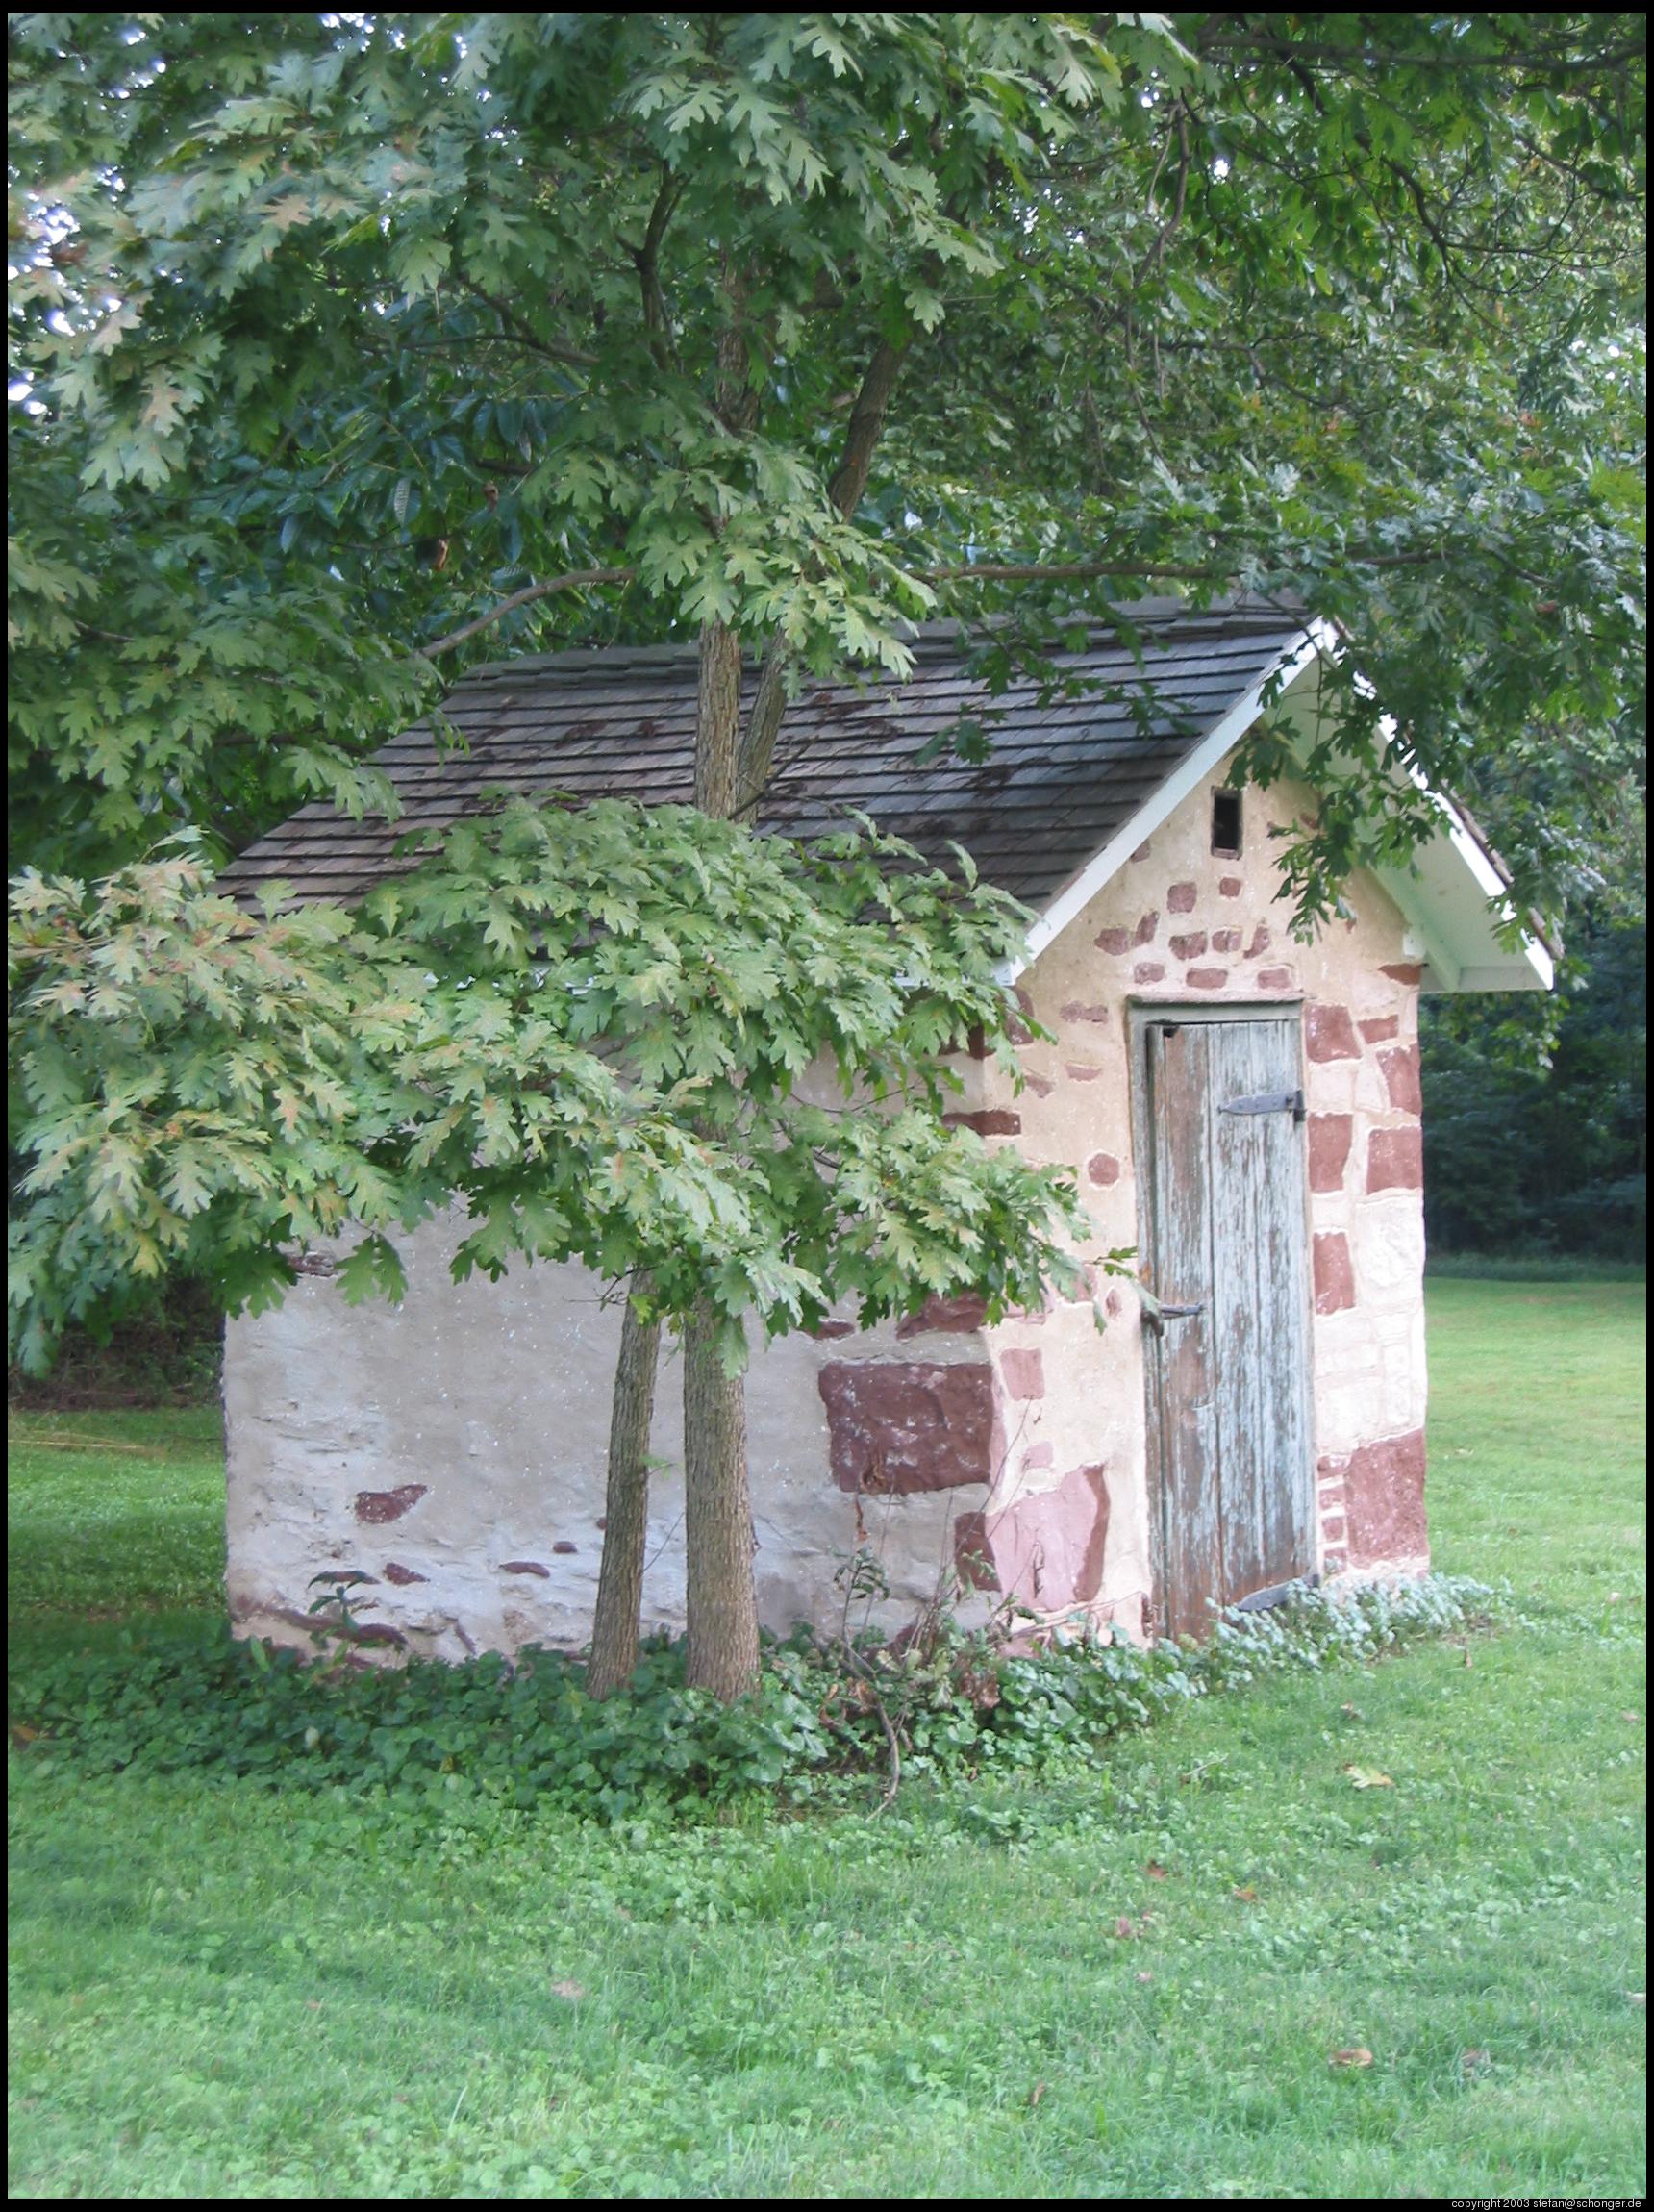 Hut at Princeton battlefield